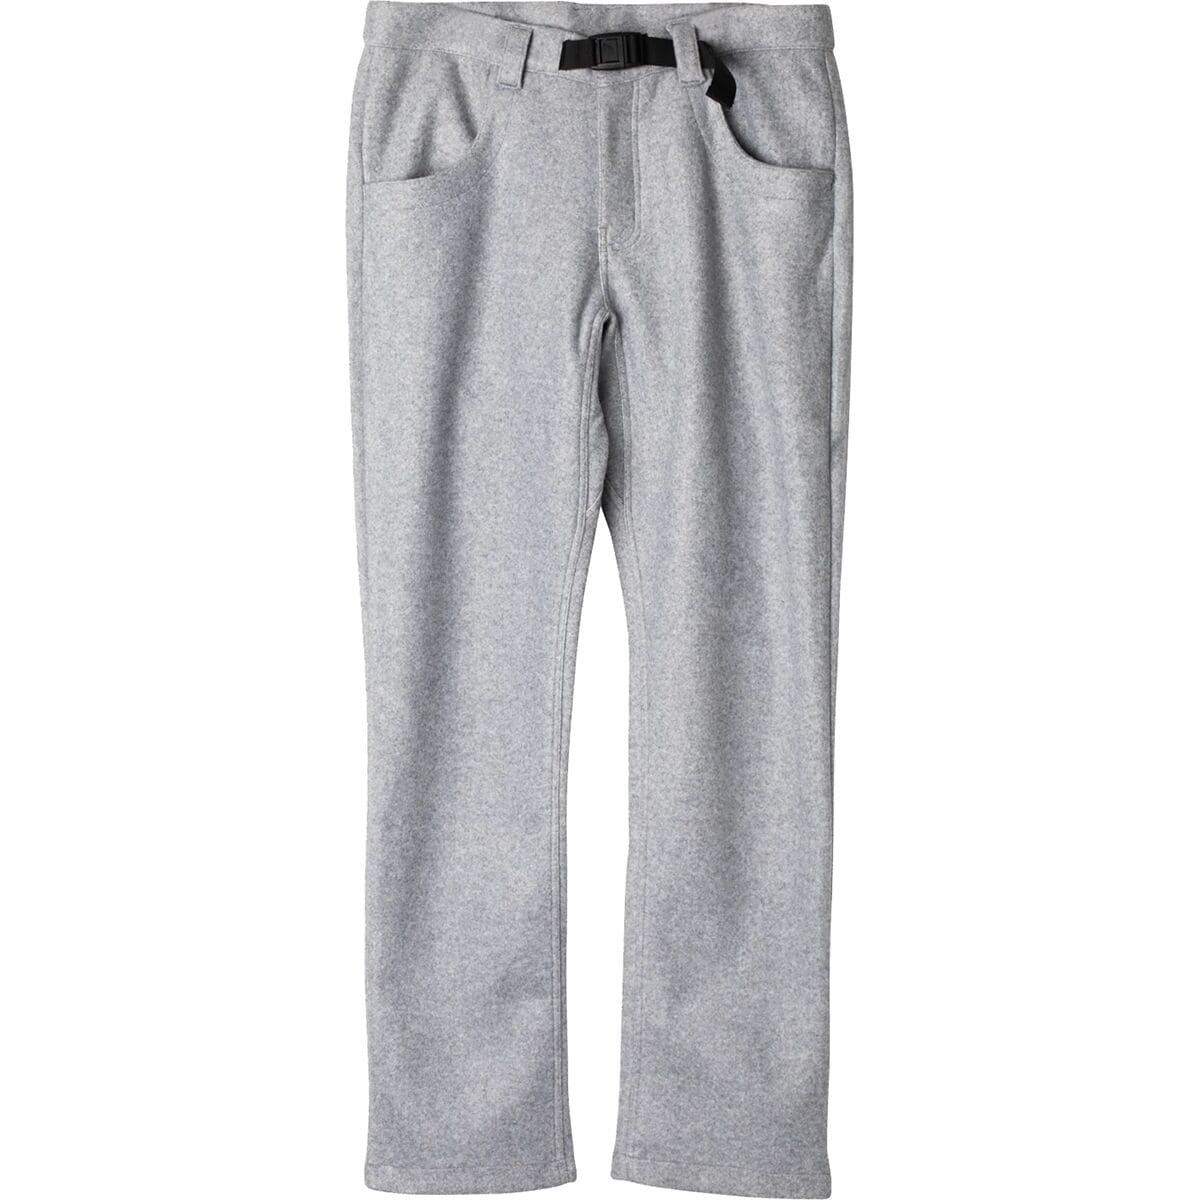 KAVU Chillin In Fleece Pant - Men's - Clothing